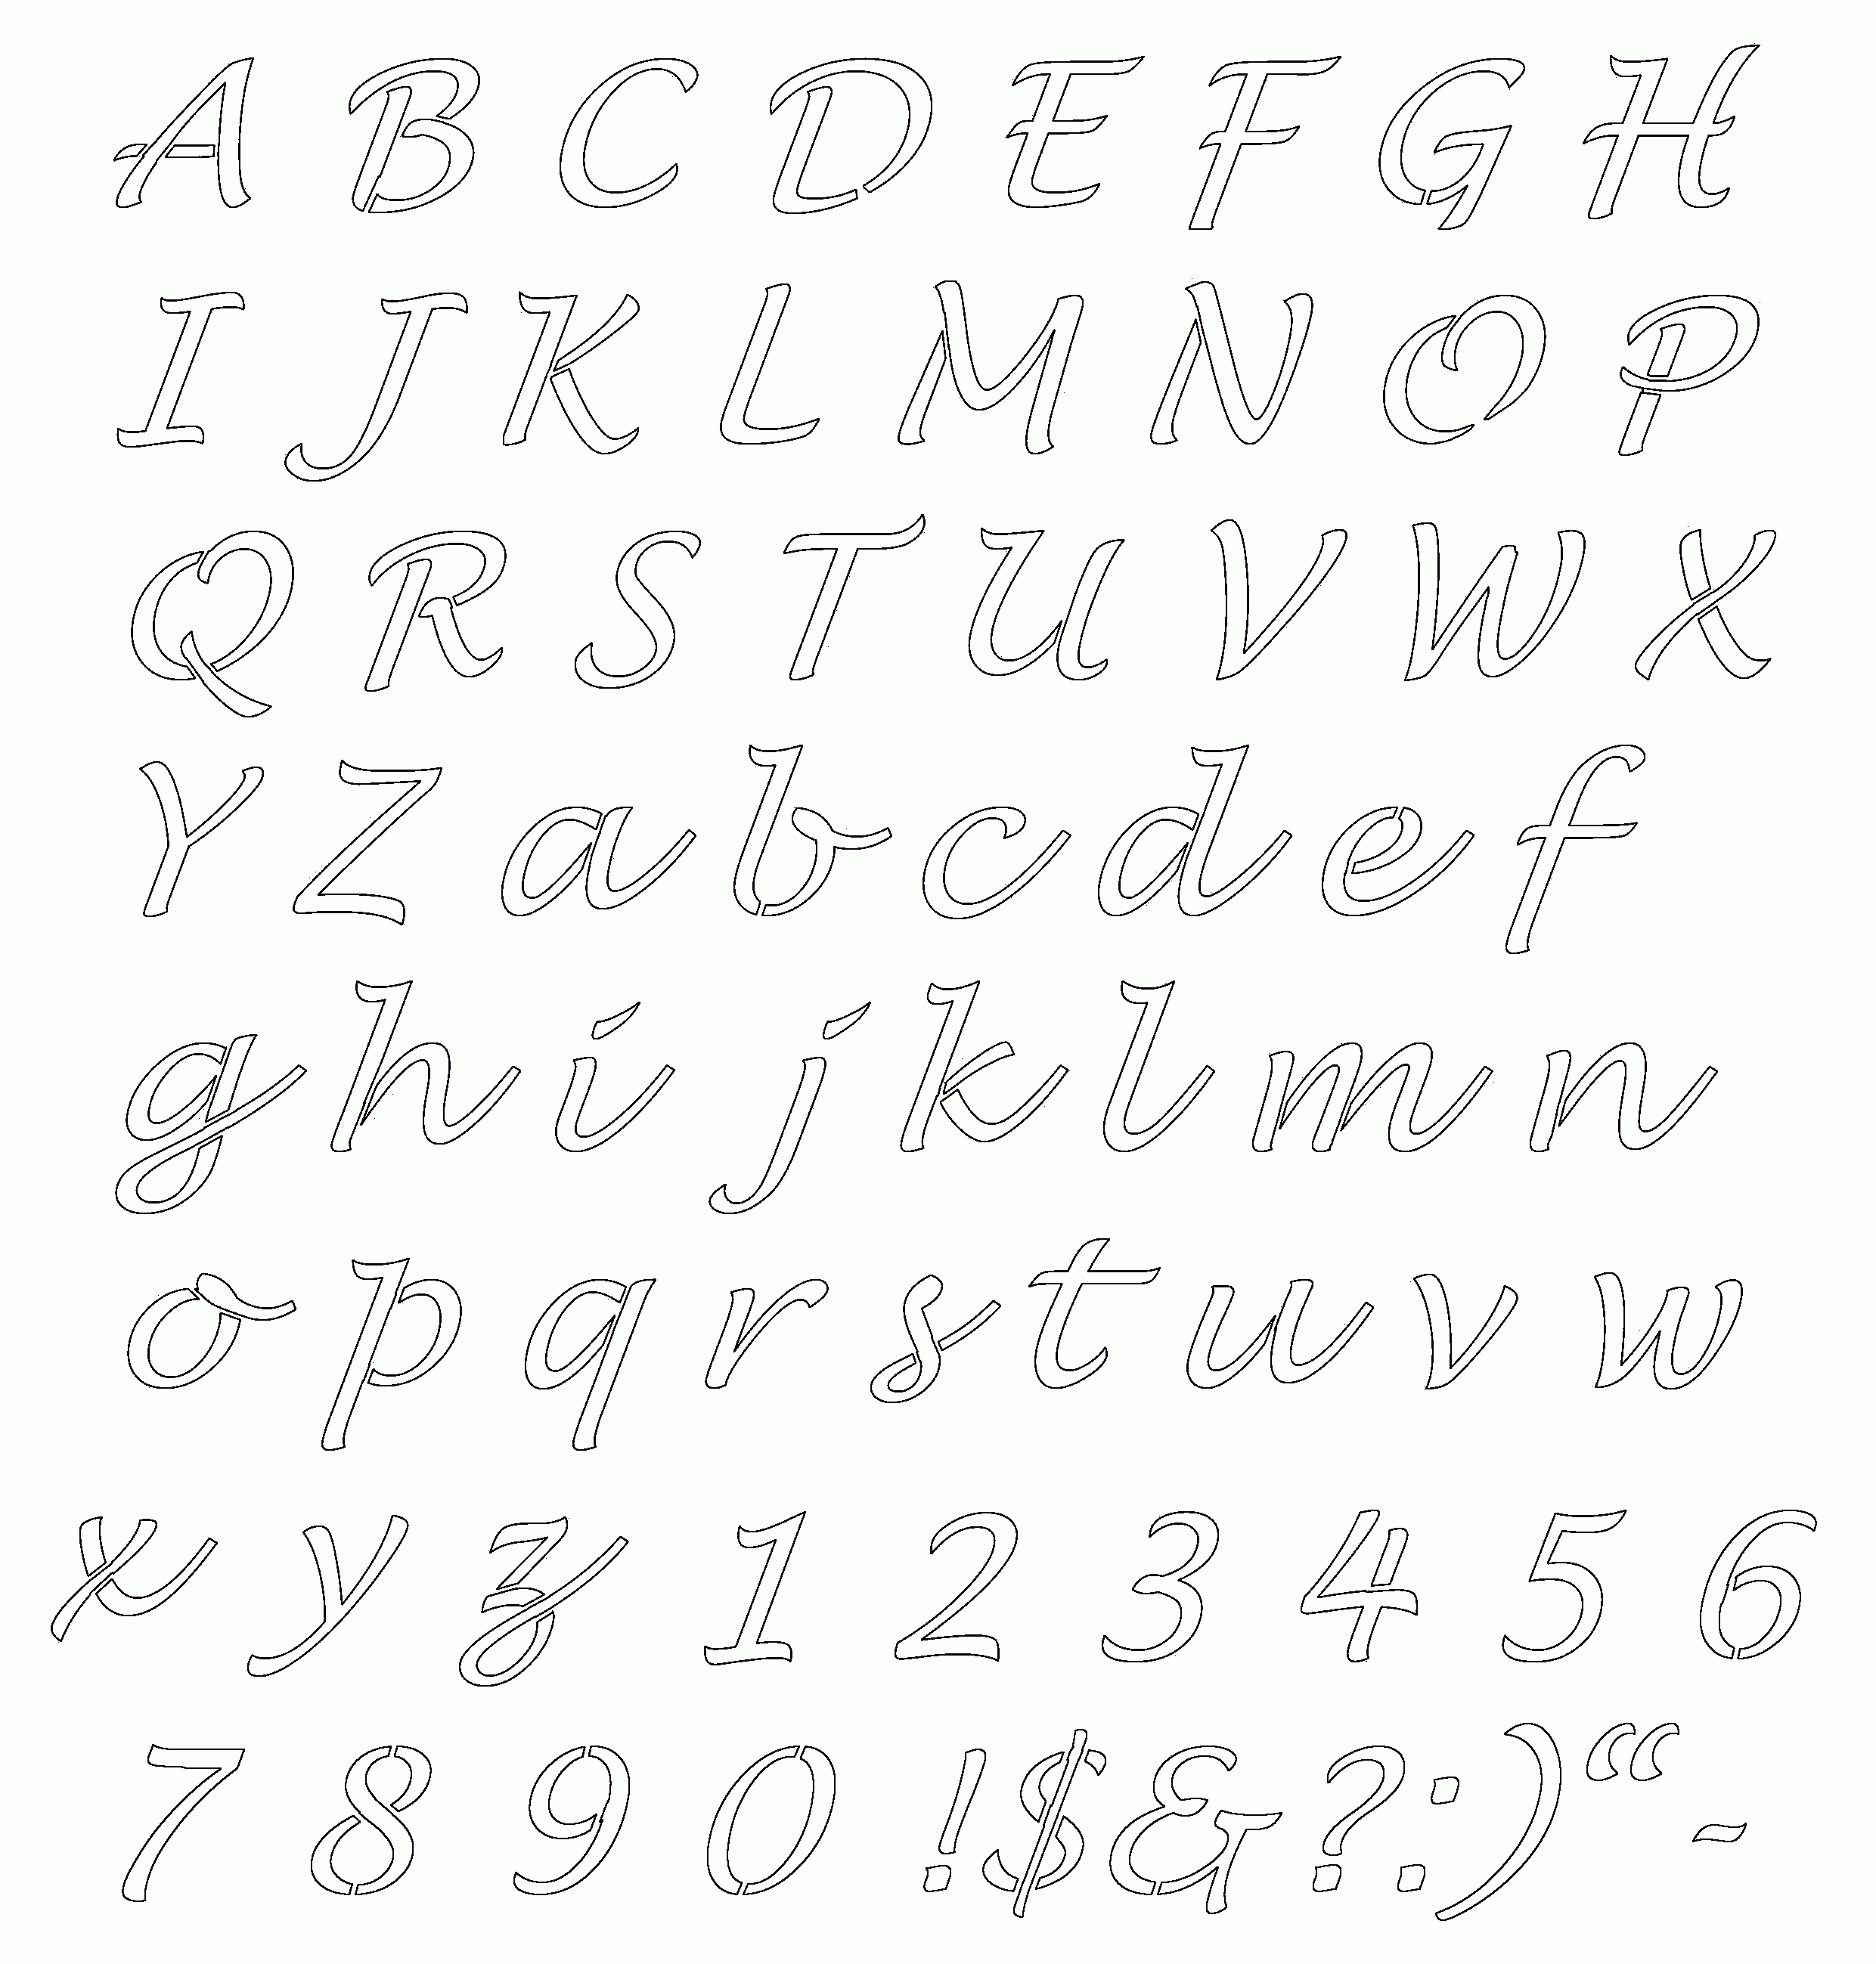 Free Printable Letter Displays | - Clip Art Library - Free Printable Alphabet Letters For Display